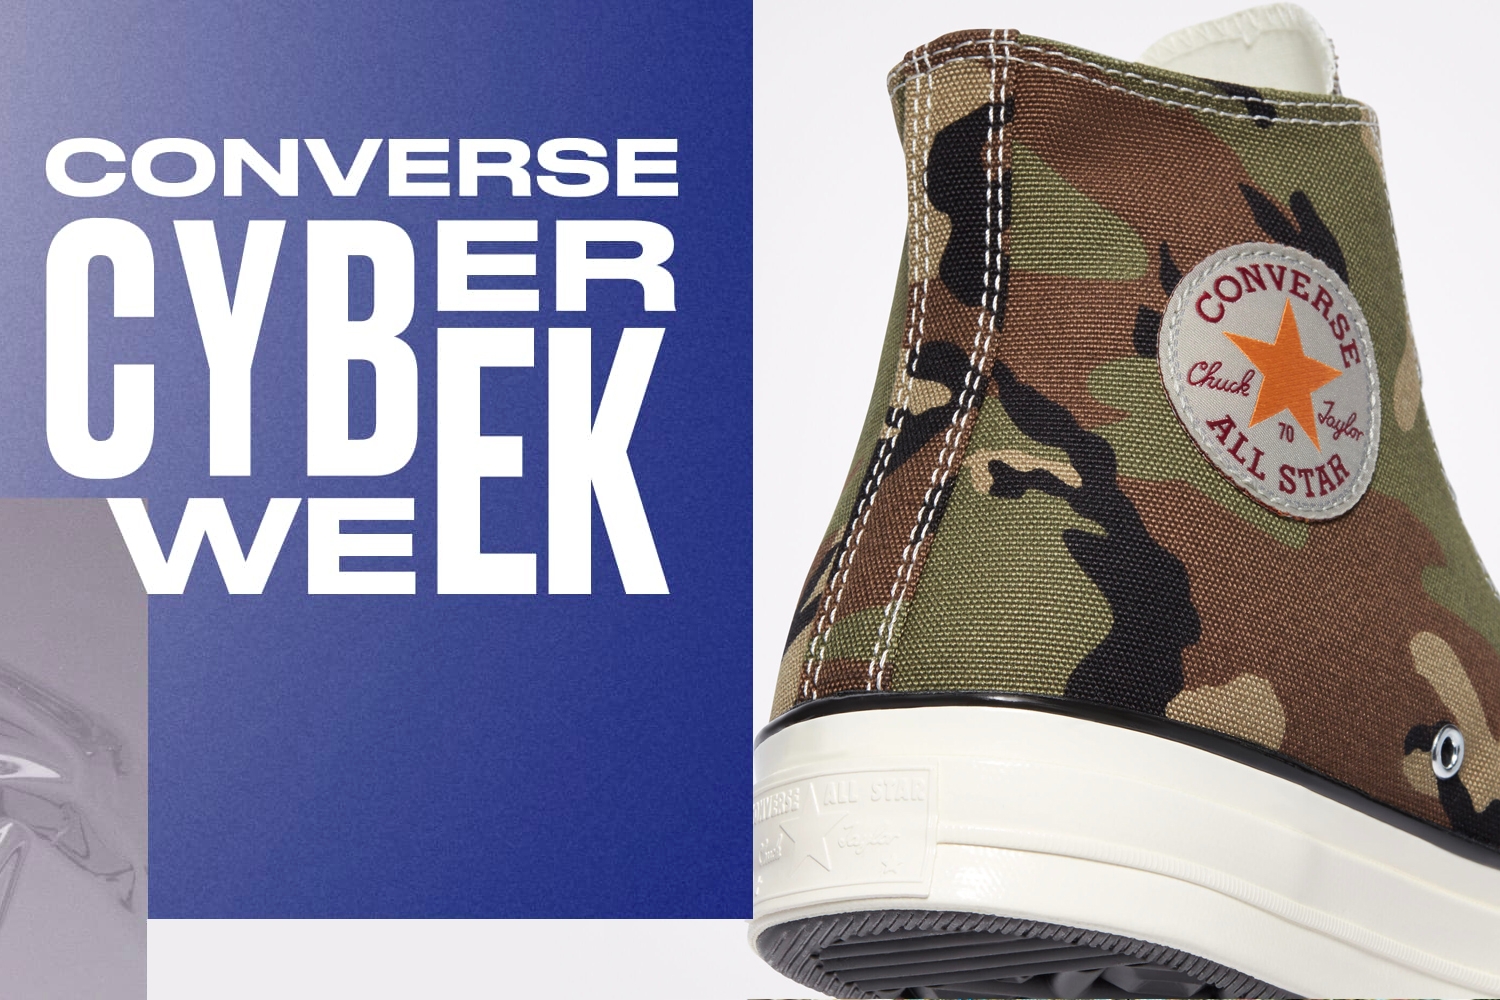 50% korting bij Converse op Limited Edition styles tijdens Cyber Week